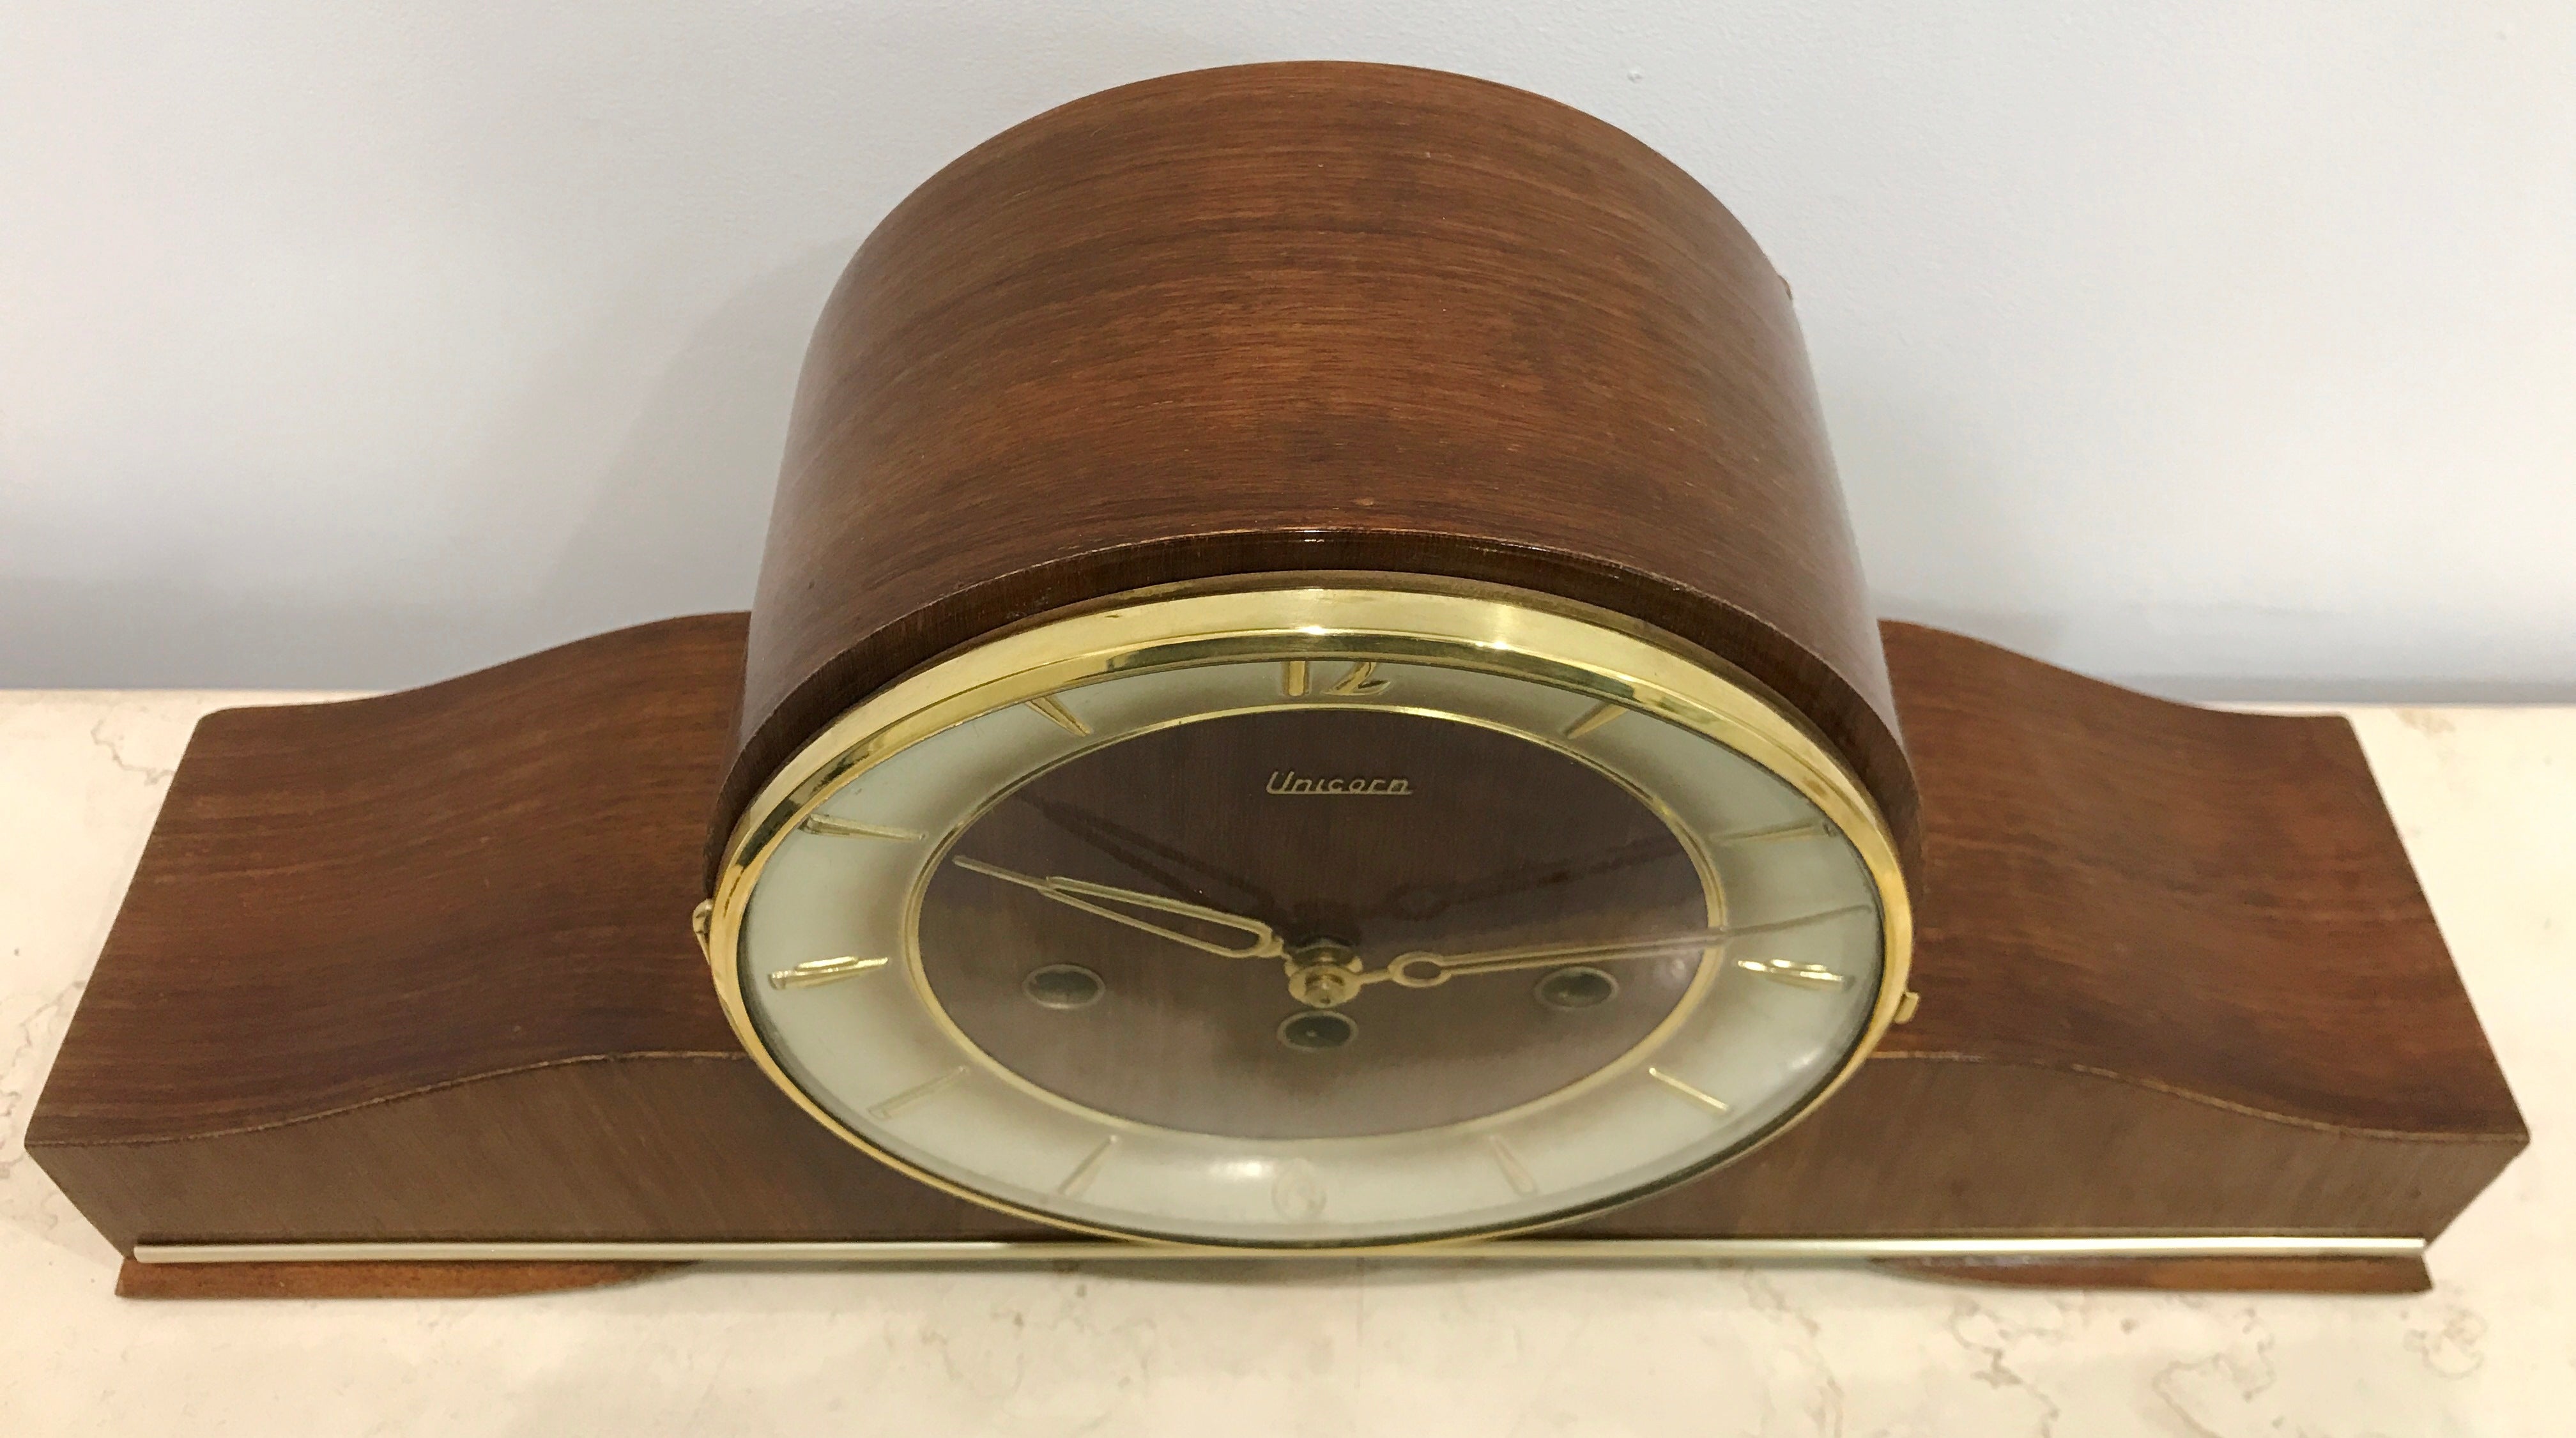 Vintage Unicorn Westminster Mantel Clock | eXibit collection